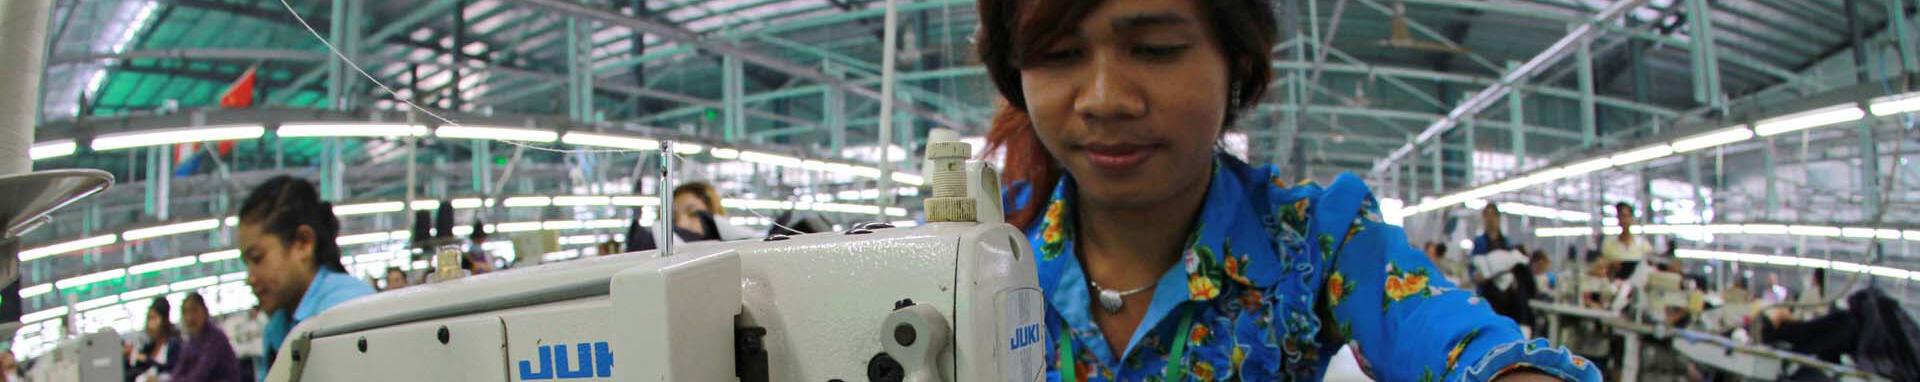 World Bank Photo Collection Cambodia garment industry worker in Phnom Penh, Cambodia Photo: Chhor Sokunthea / World Bank